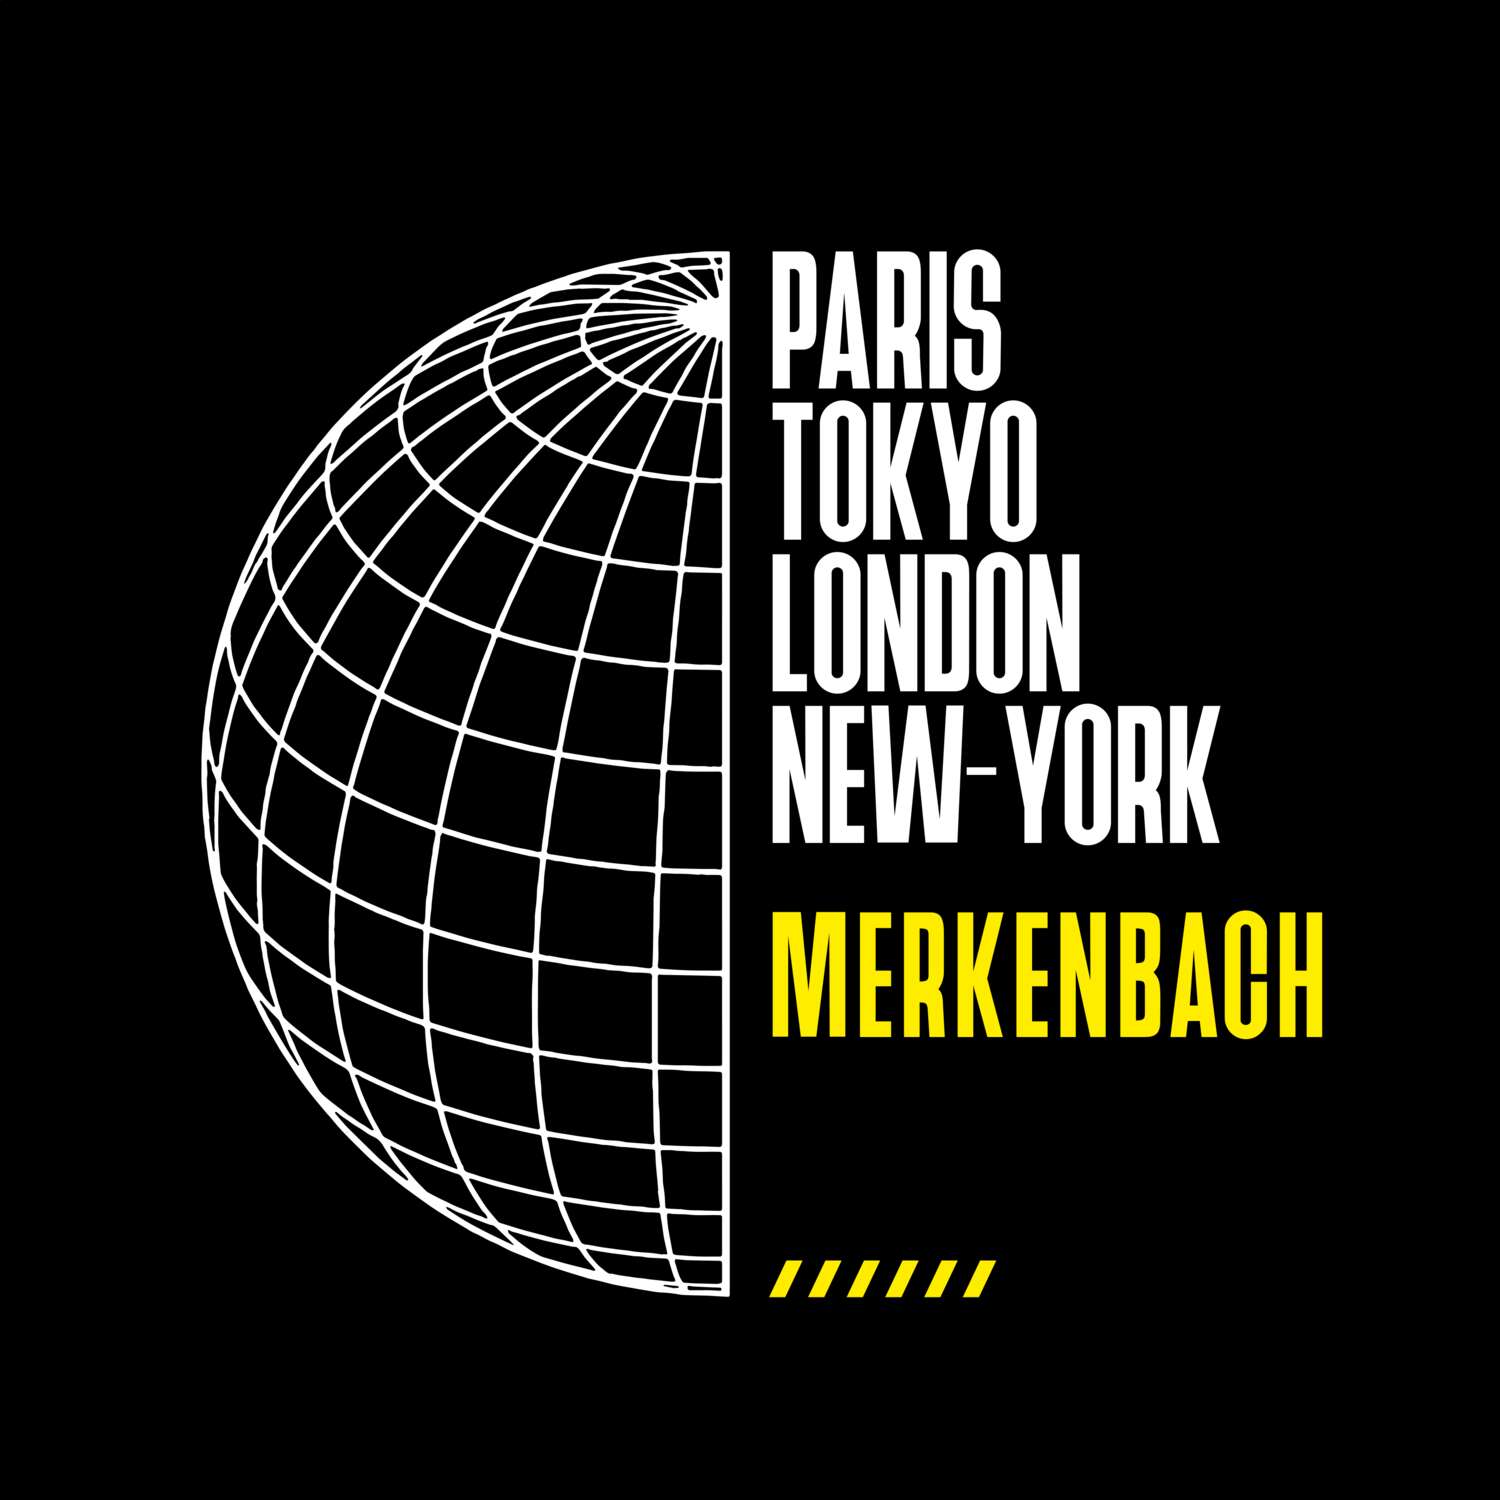 Merkenbach T-Shirt »Paris Tokyo London«